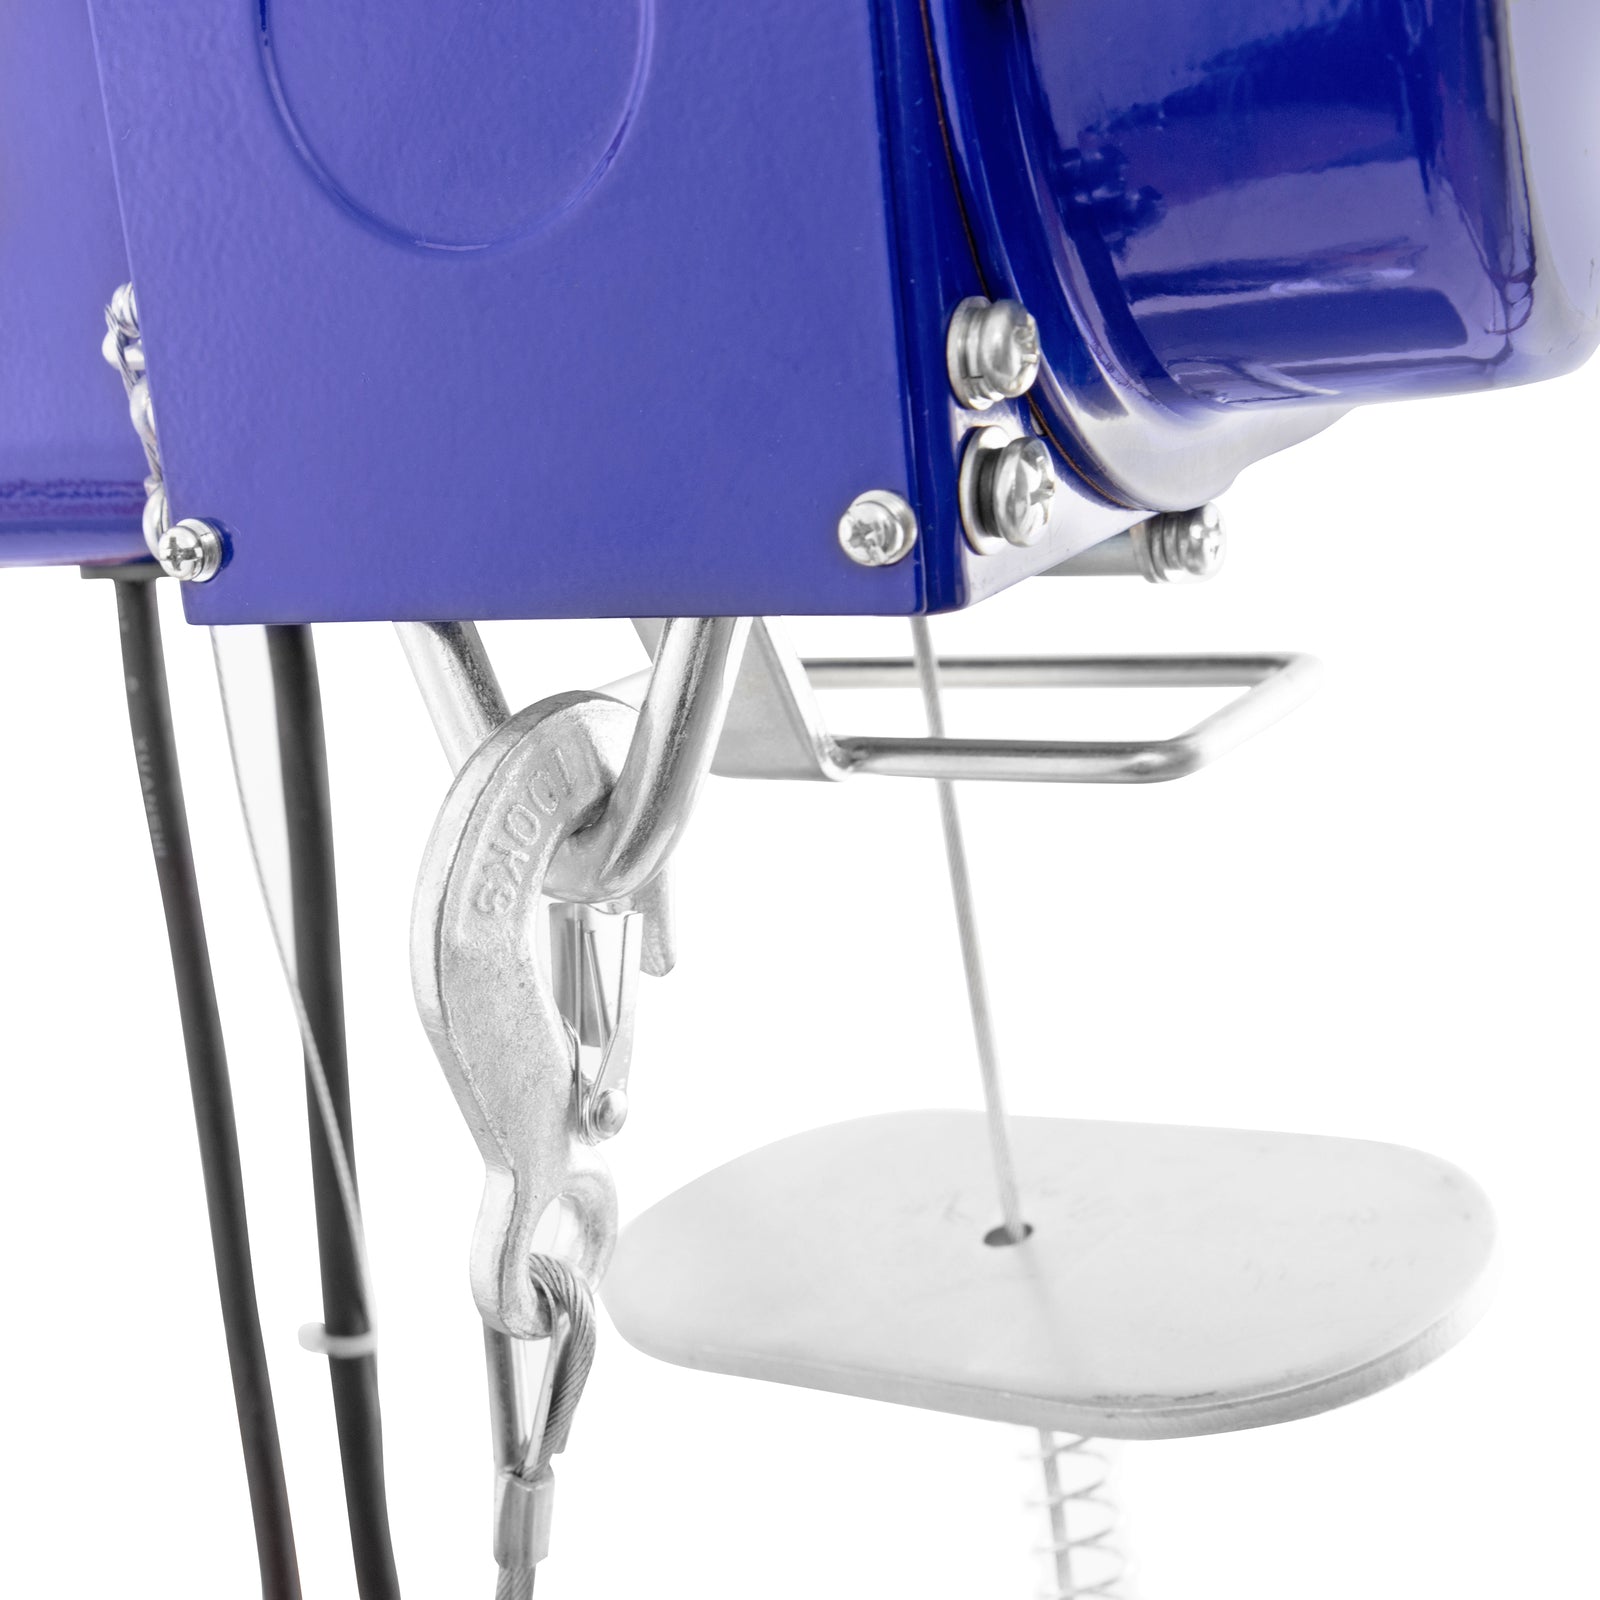 Portable Electric Hoist MOBILE